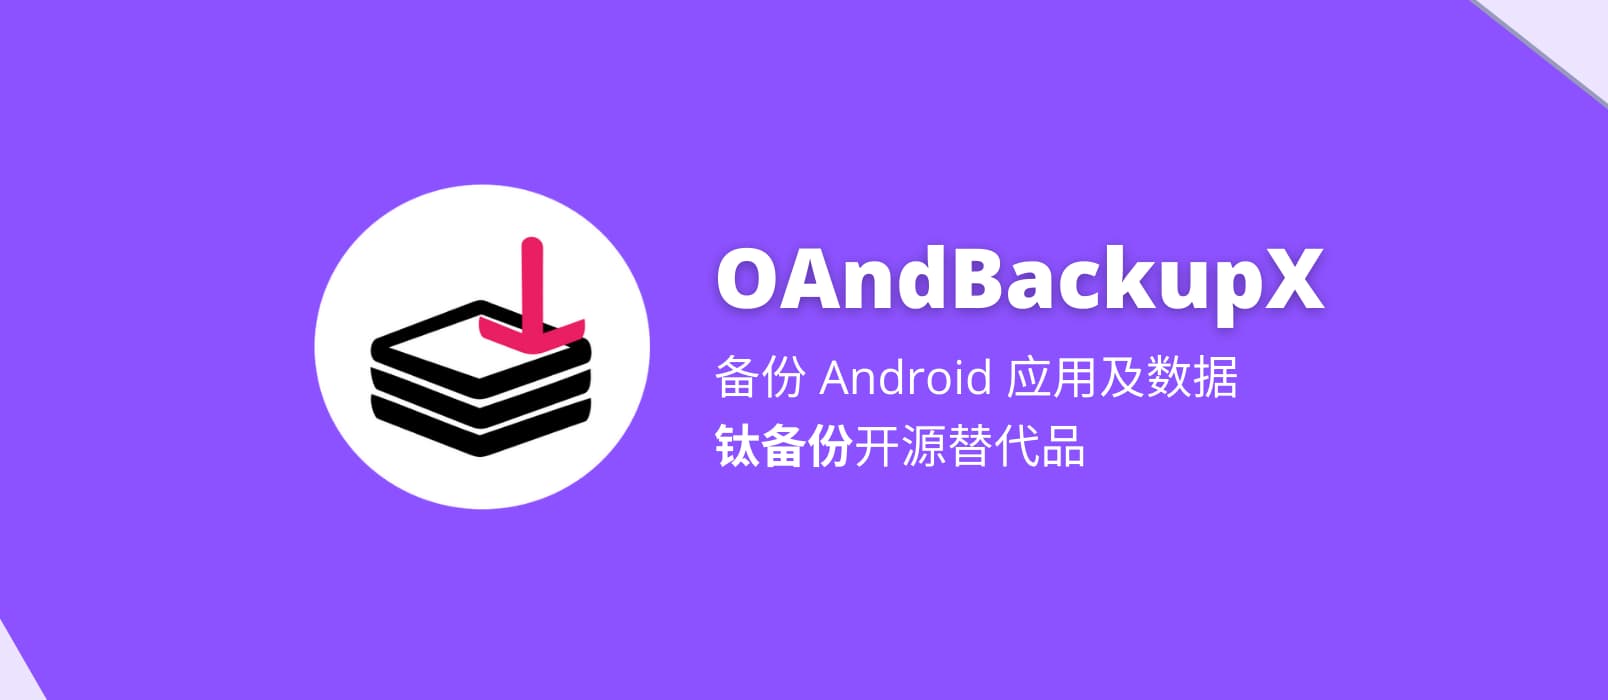 OAndBackupX - 钛备份开源替代品，Android 应用数据备份与恢复工具 1